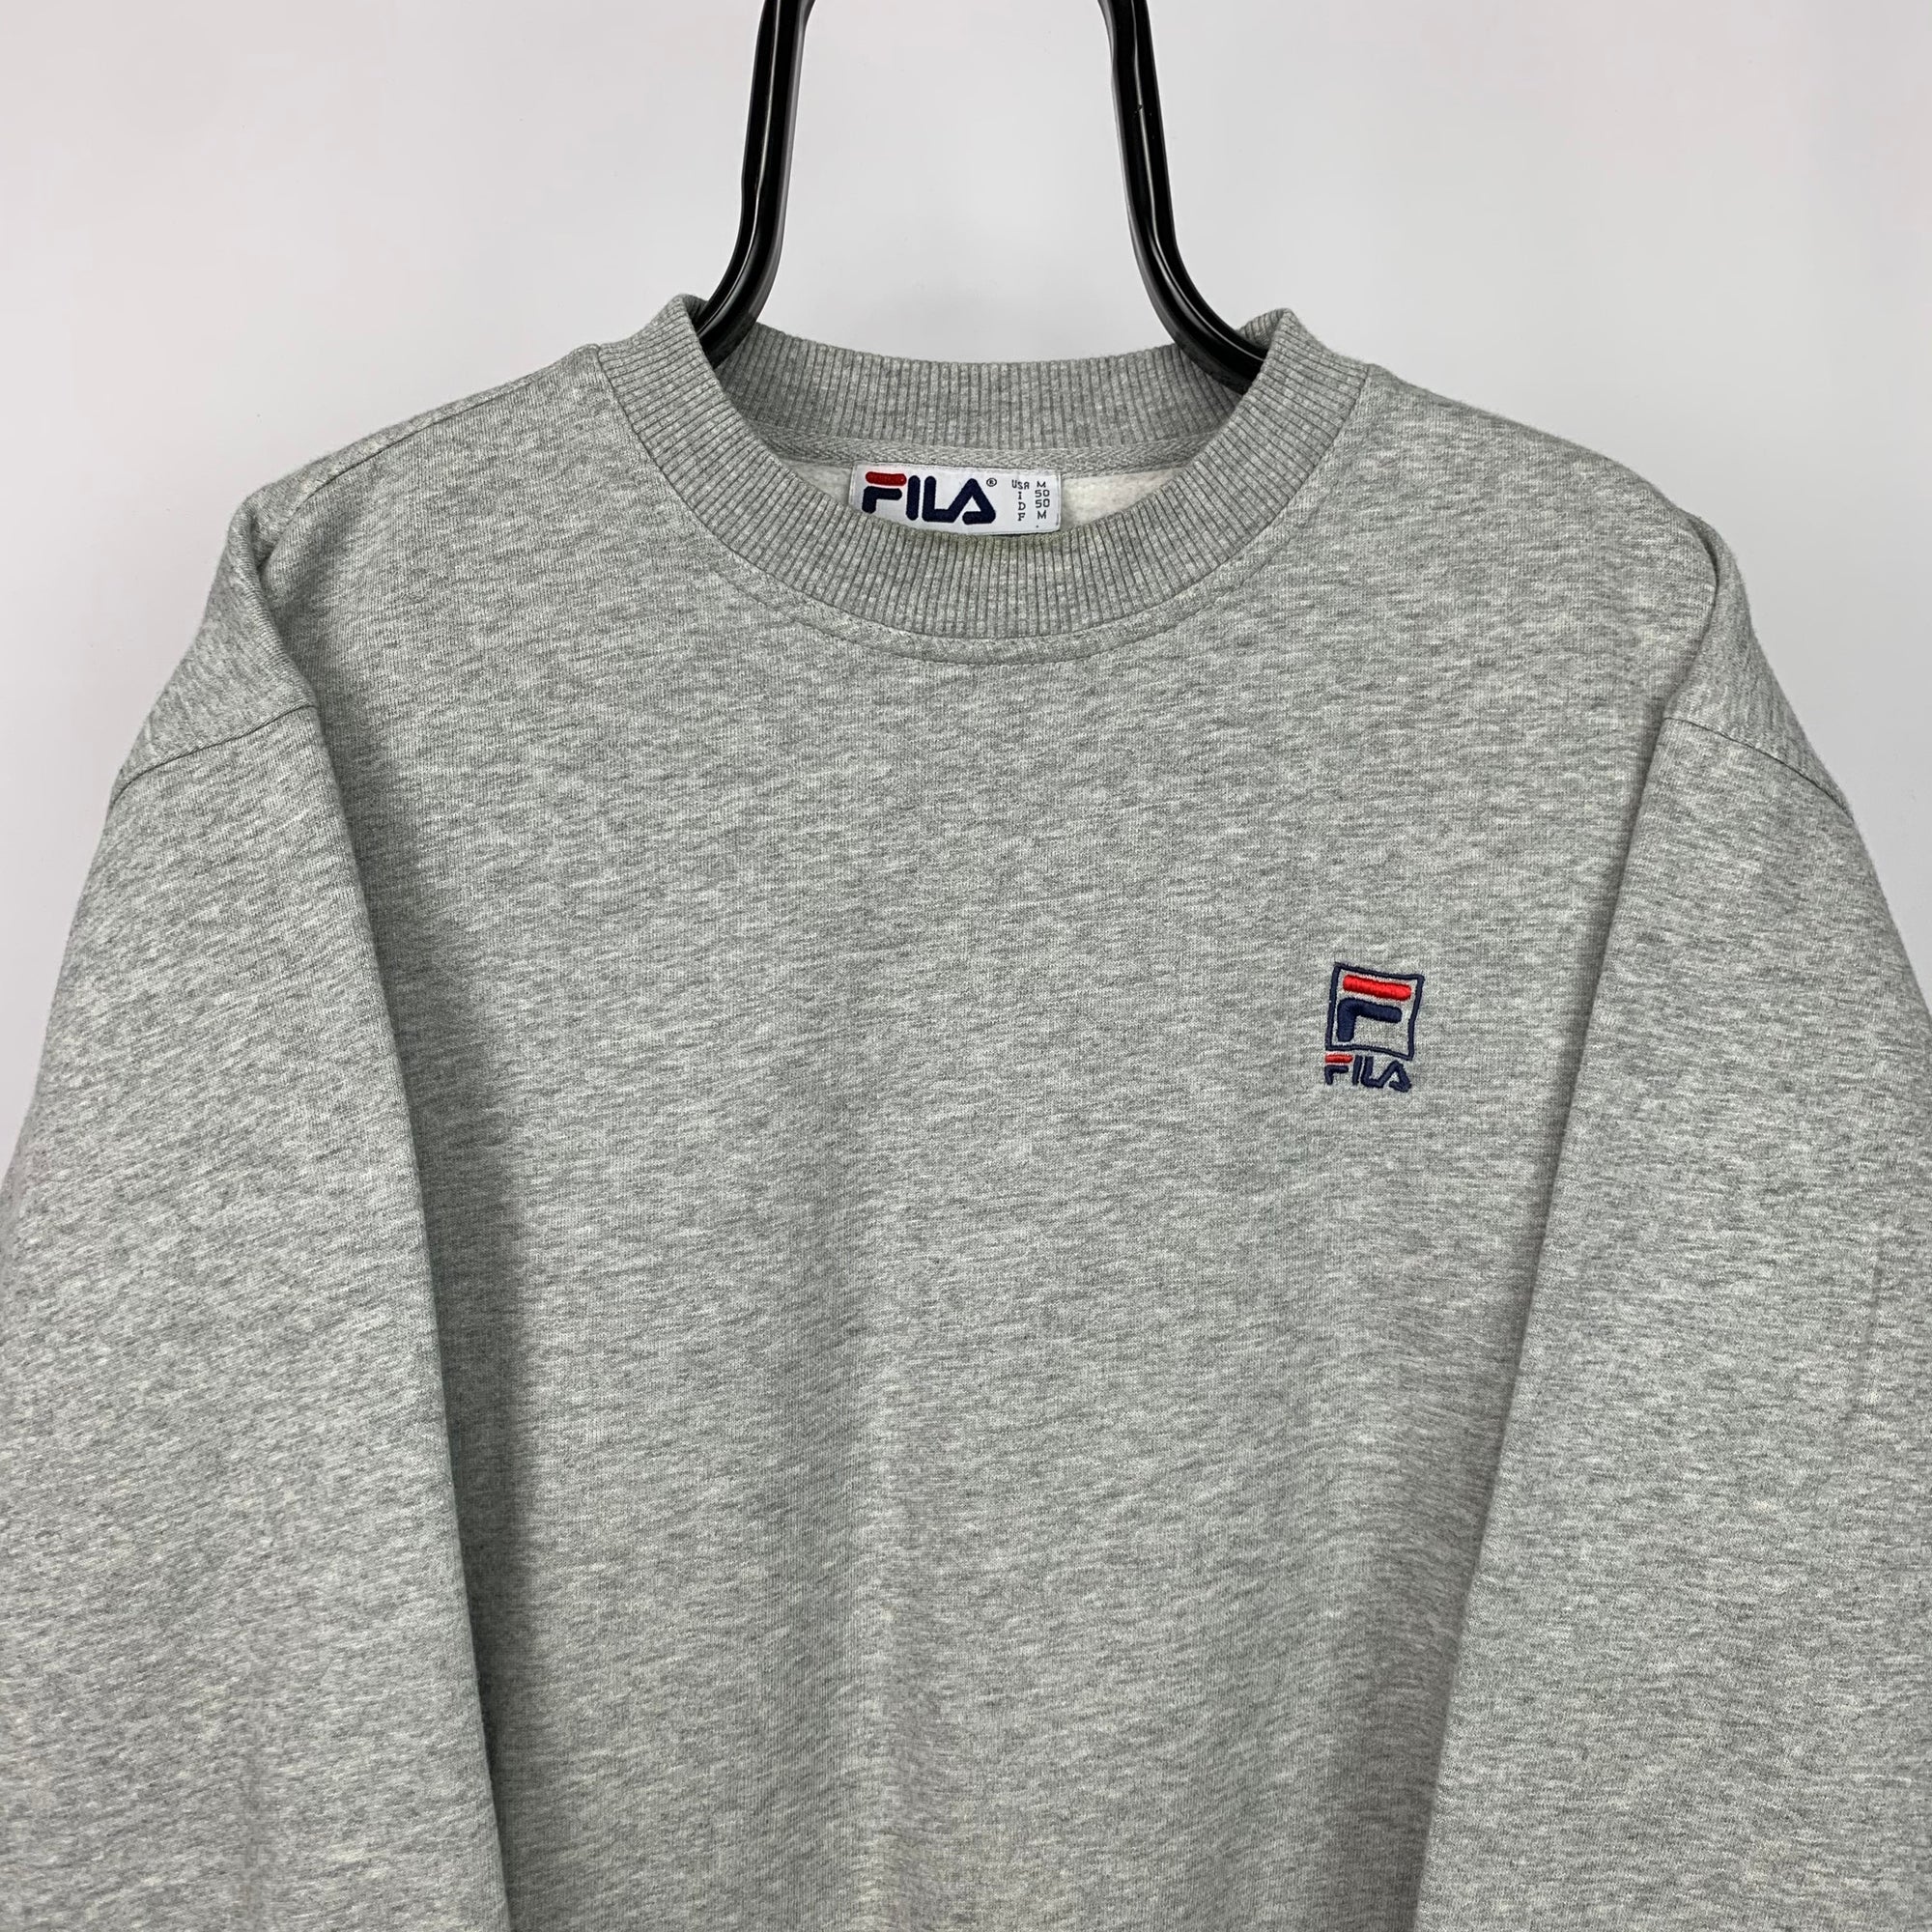 Vintage 90s Fila Small Spellout Sweatshirt in Grey - Men's Medium/Women's Large